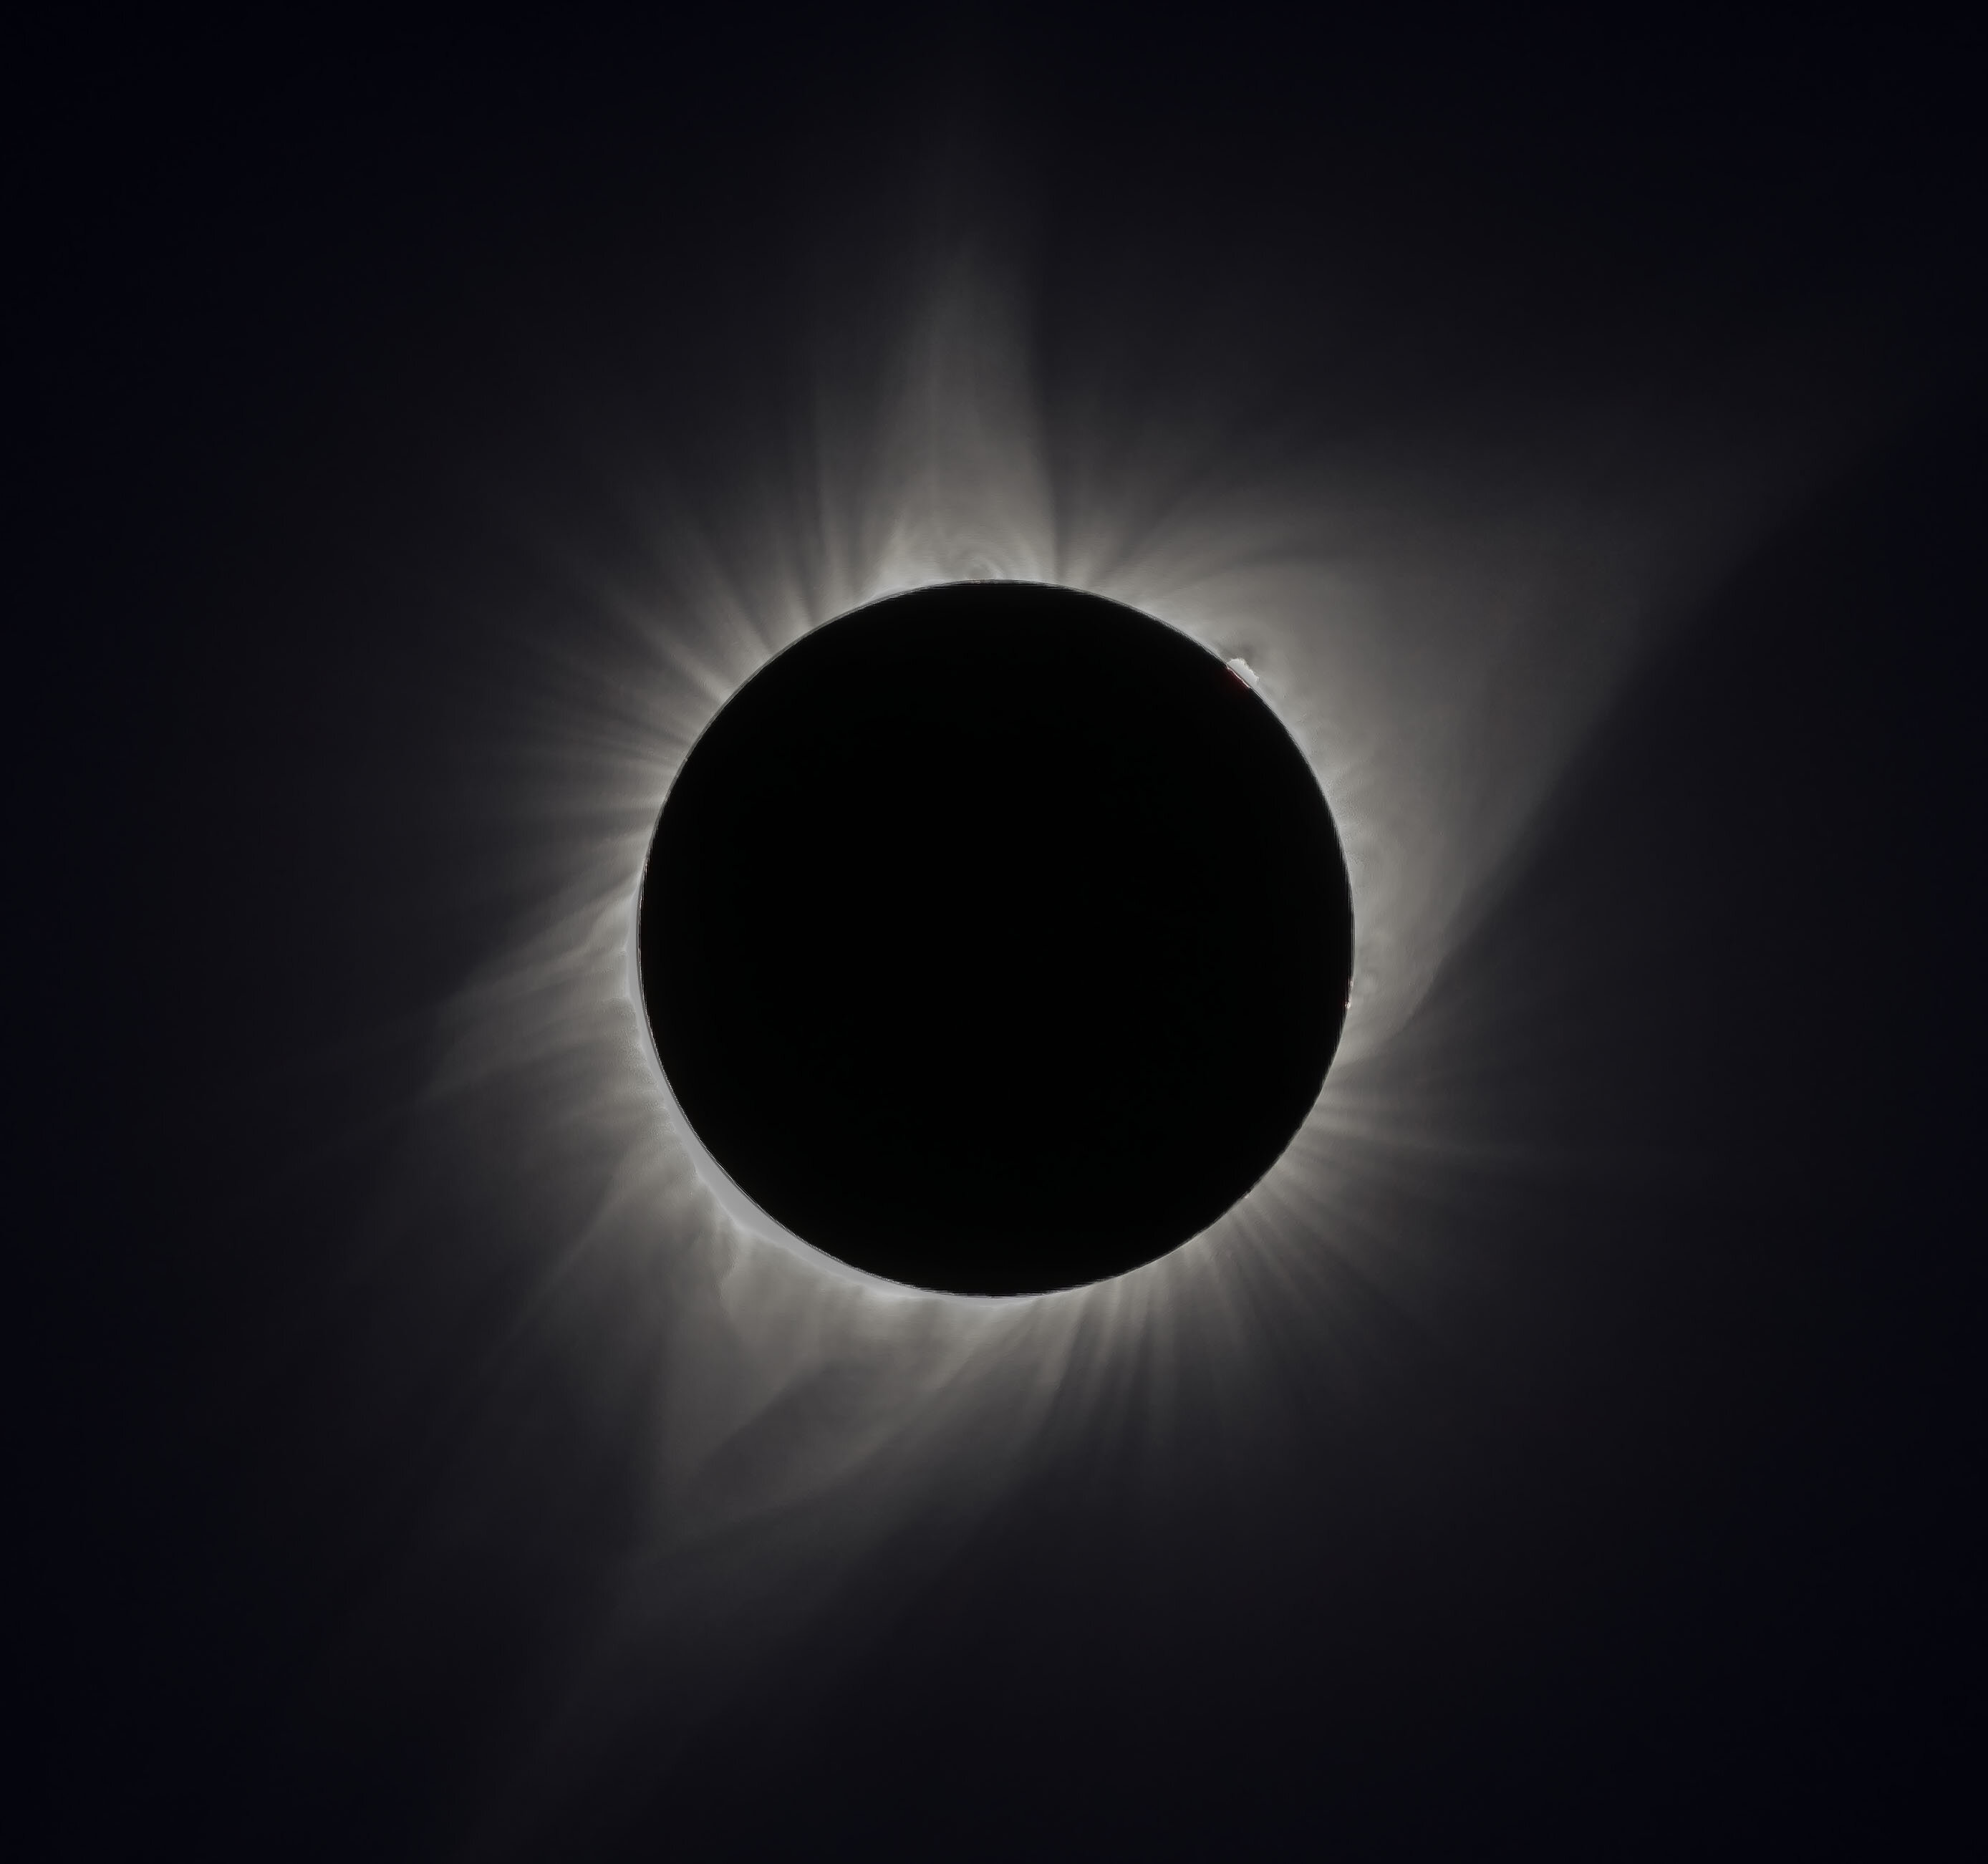 Eclipse 2017 @ Boysen State Park, Wy - 400mm 1/60s